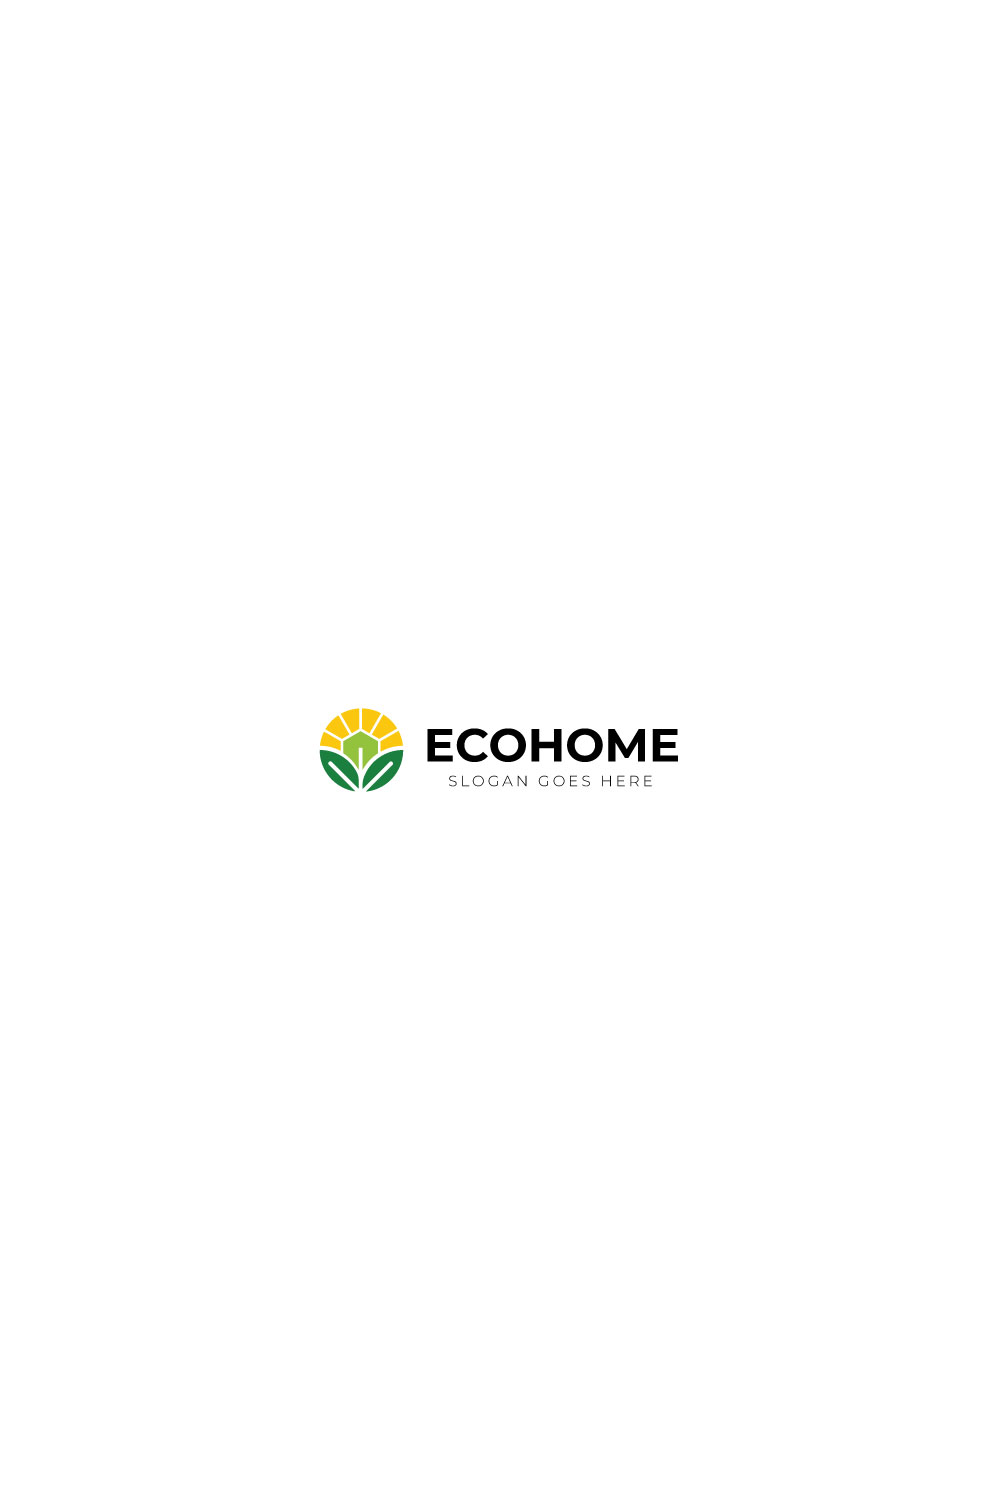 Eco Home Logo design pinterest preview image.